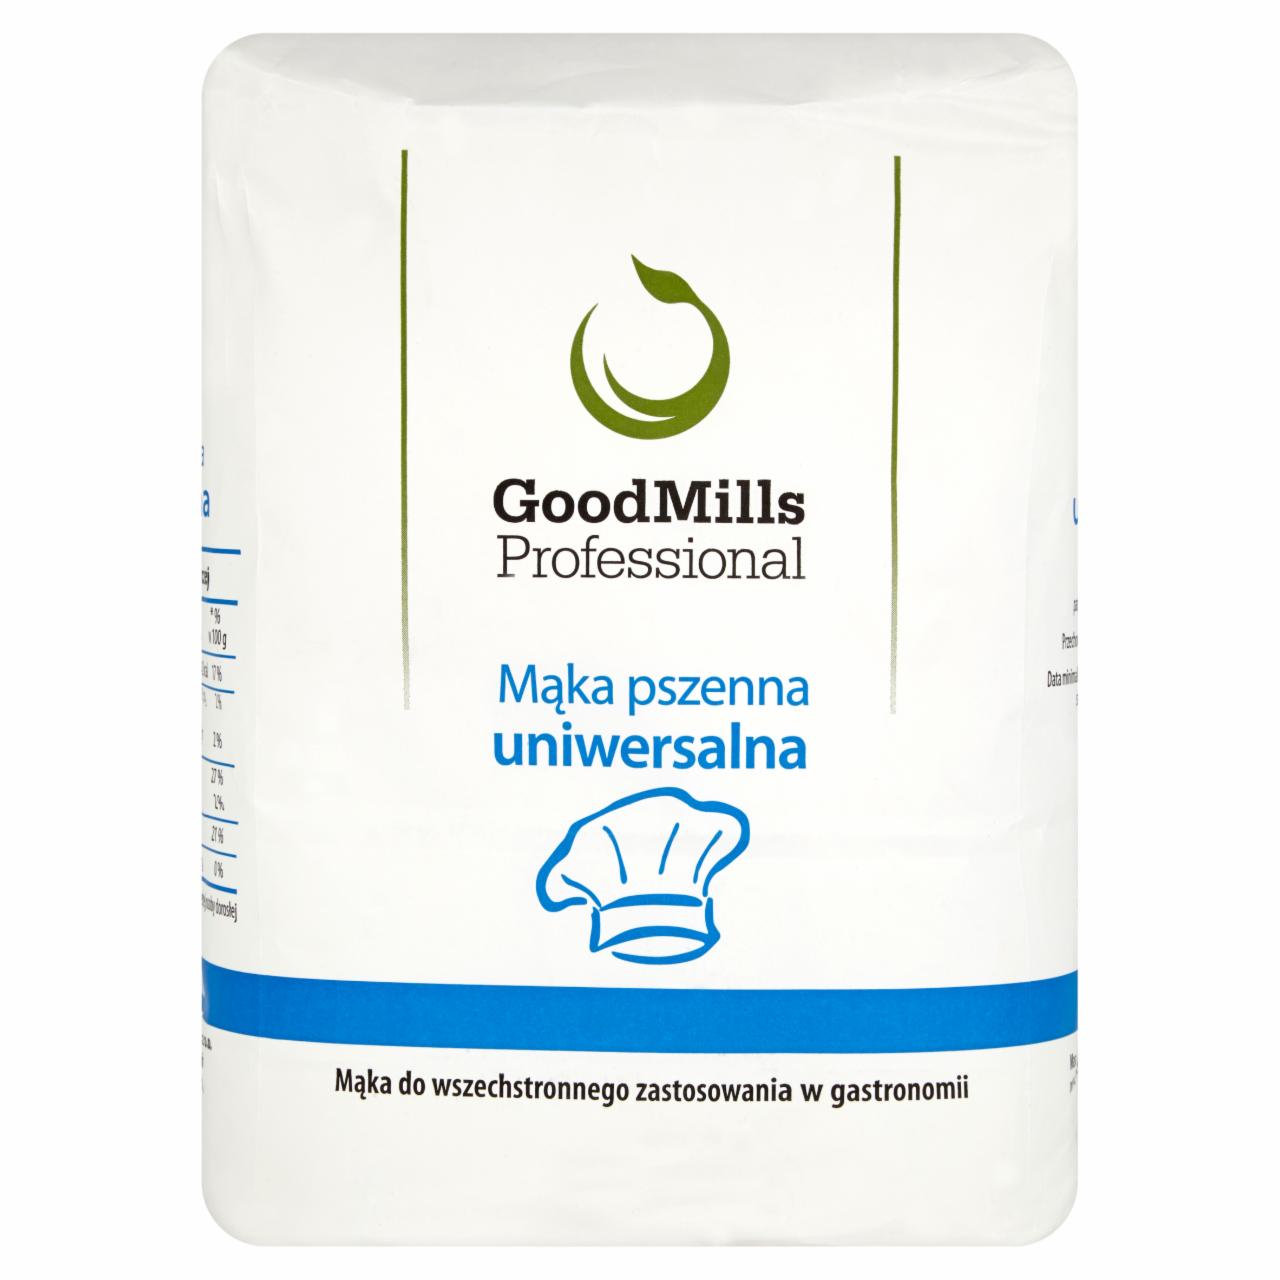 Zdjęcia - GoodMills Professional Mąka pszenna uniwersalna typ 500 5 kg